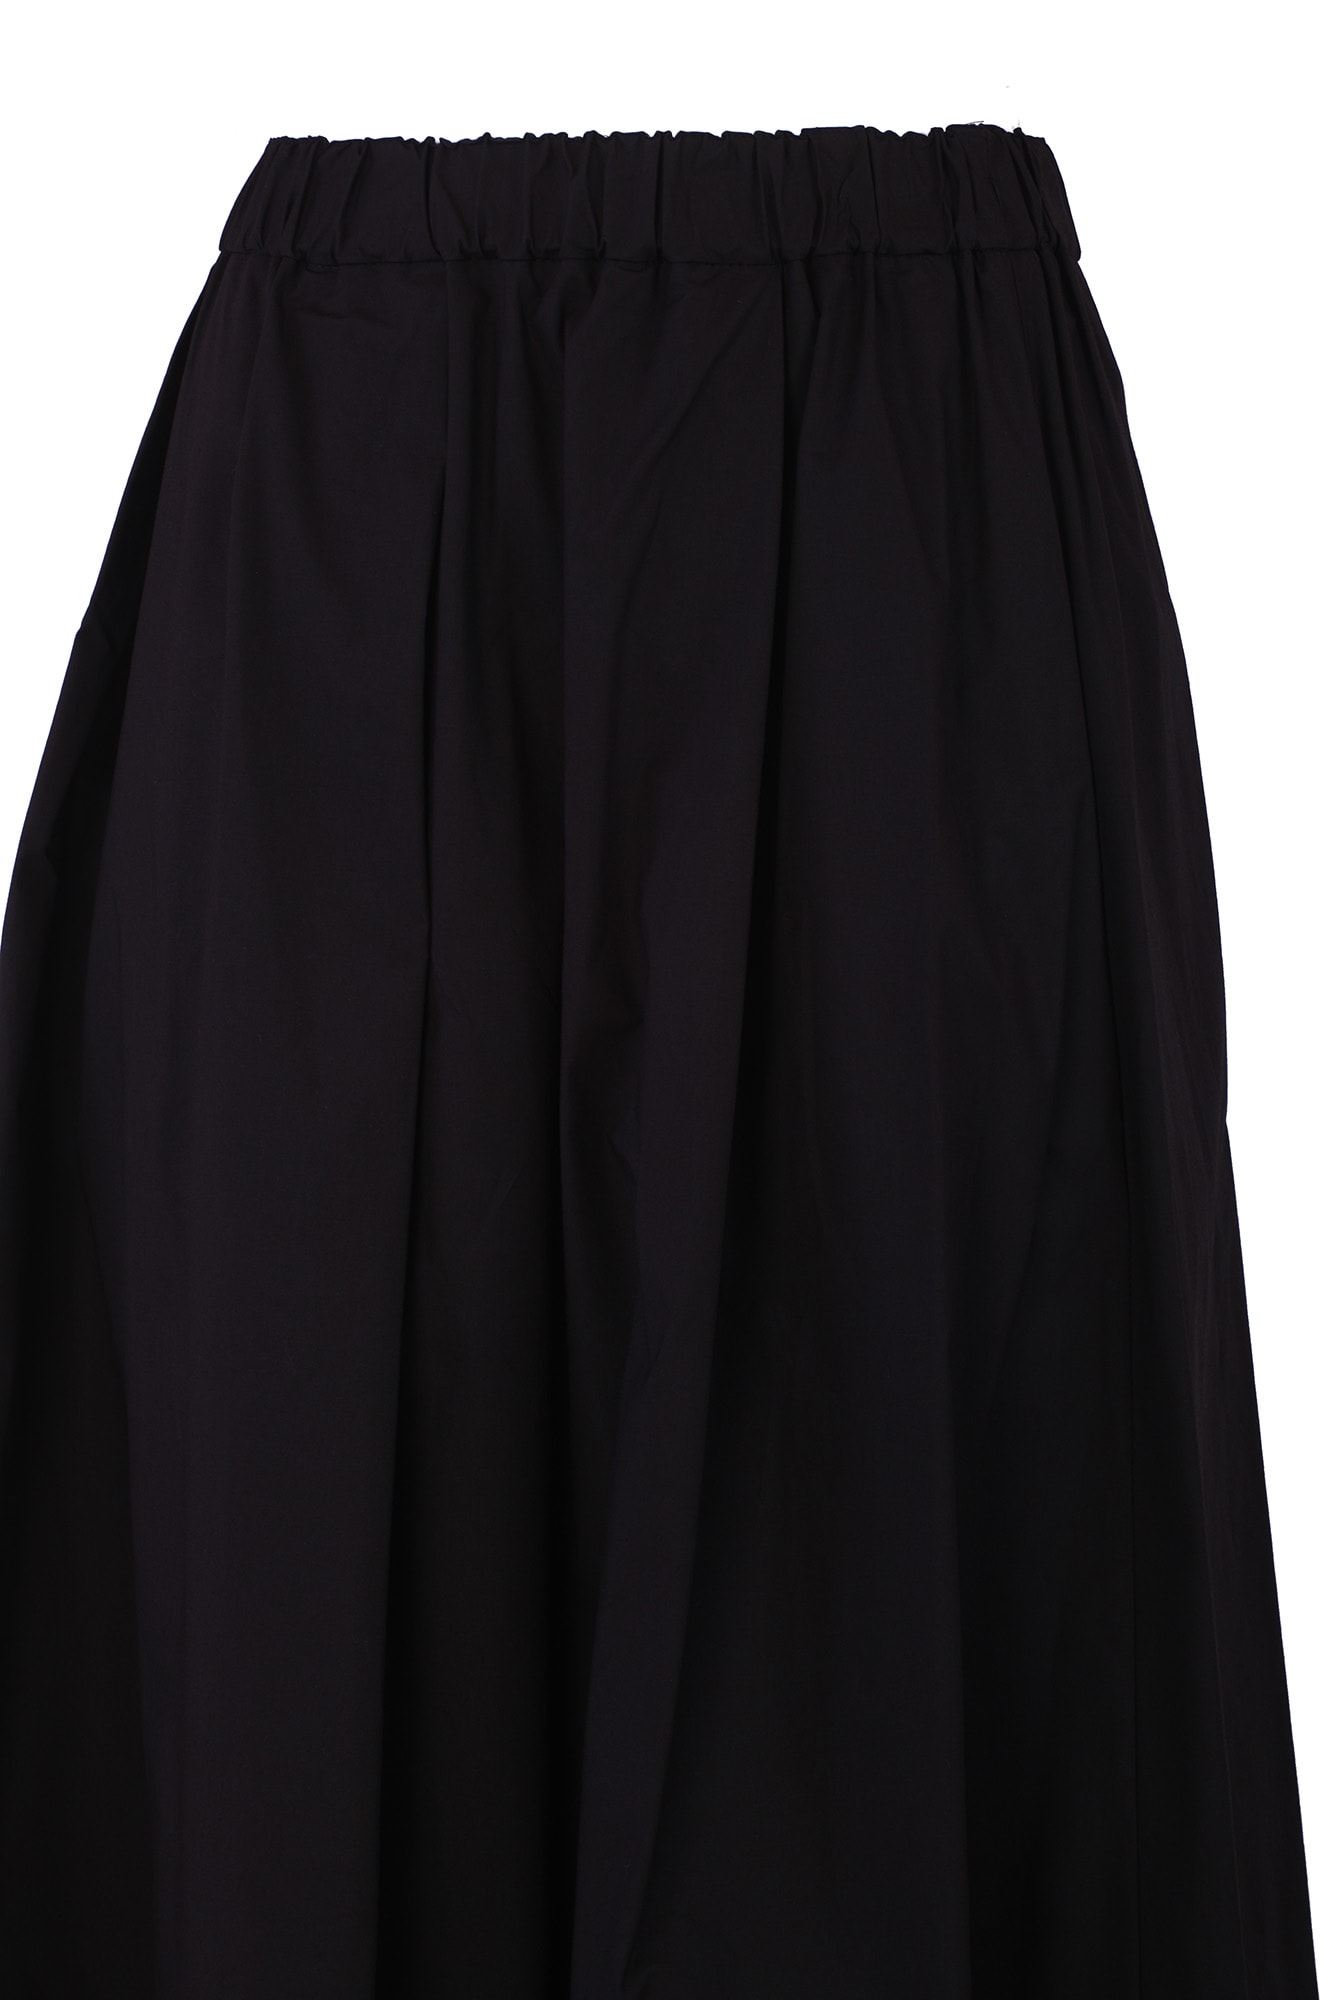 Shop Antonelli Firenze Skirts Black